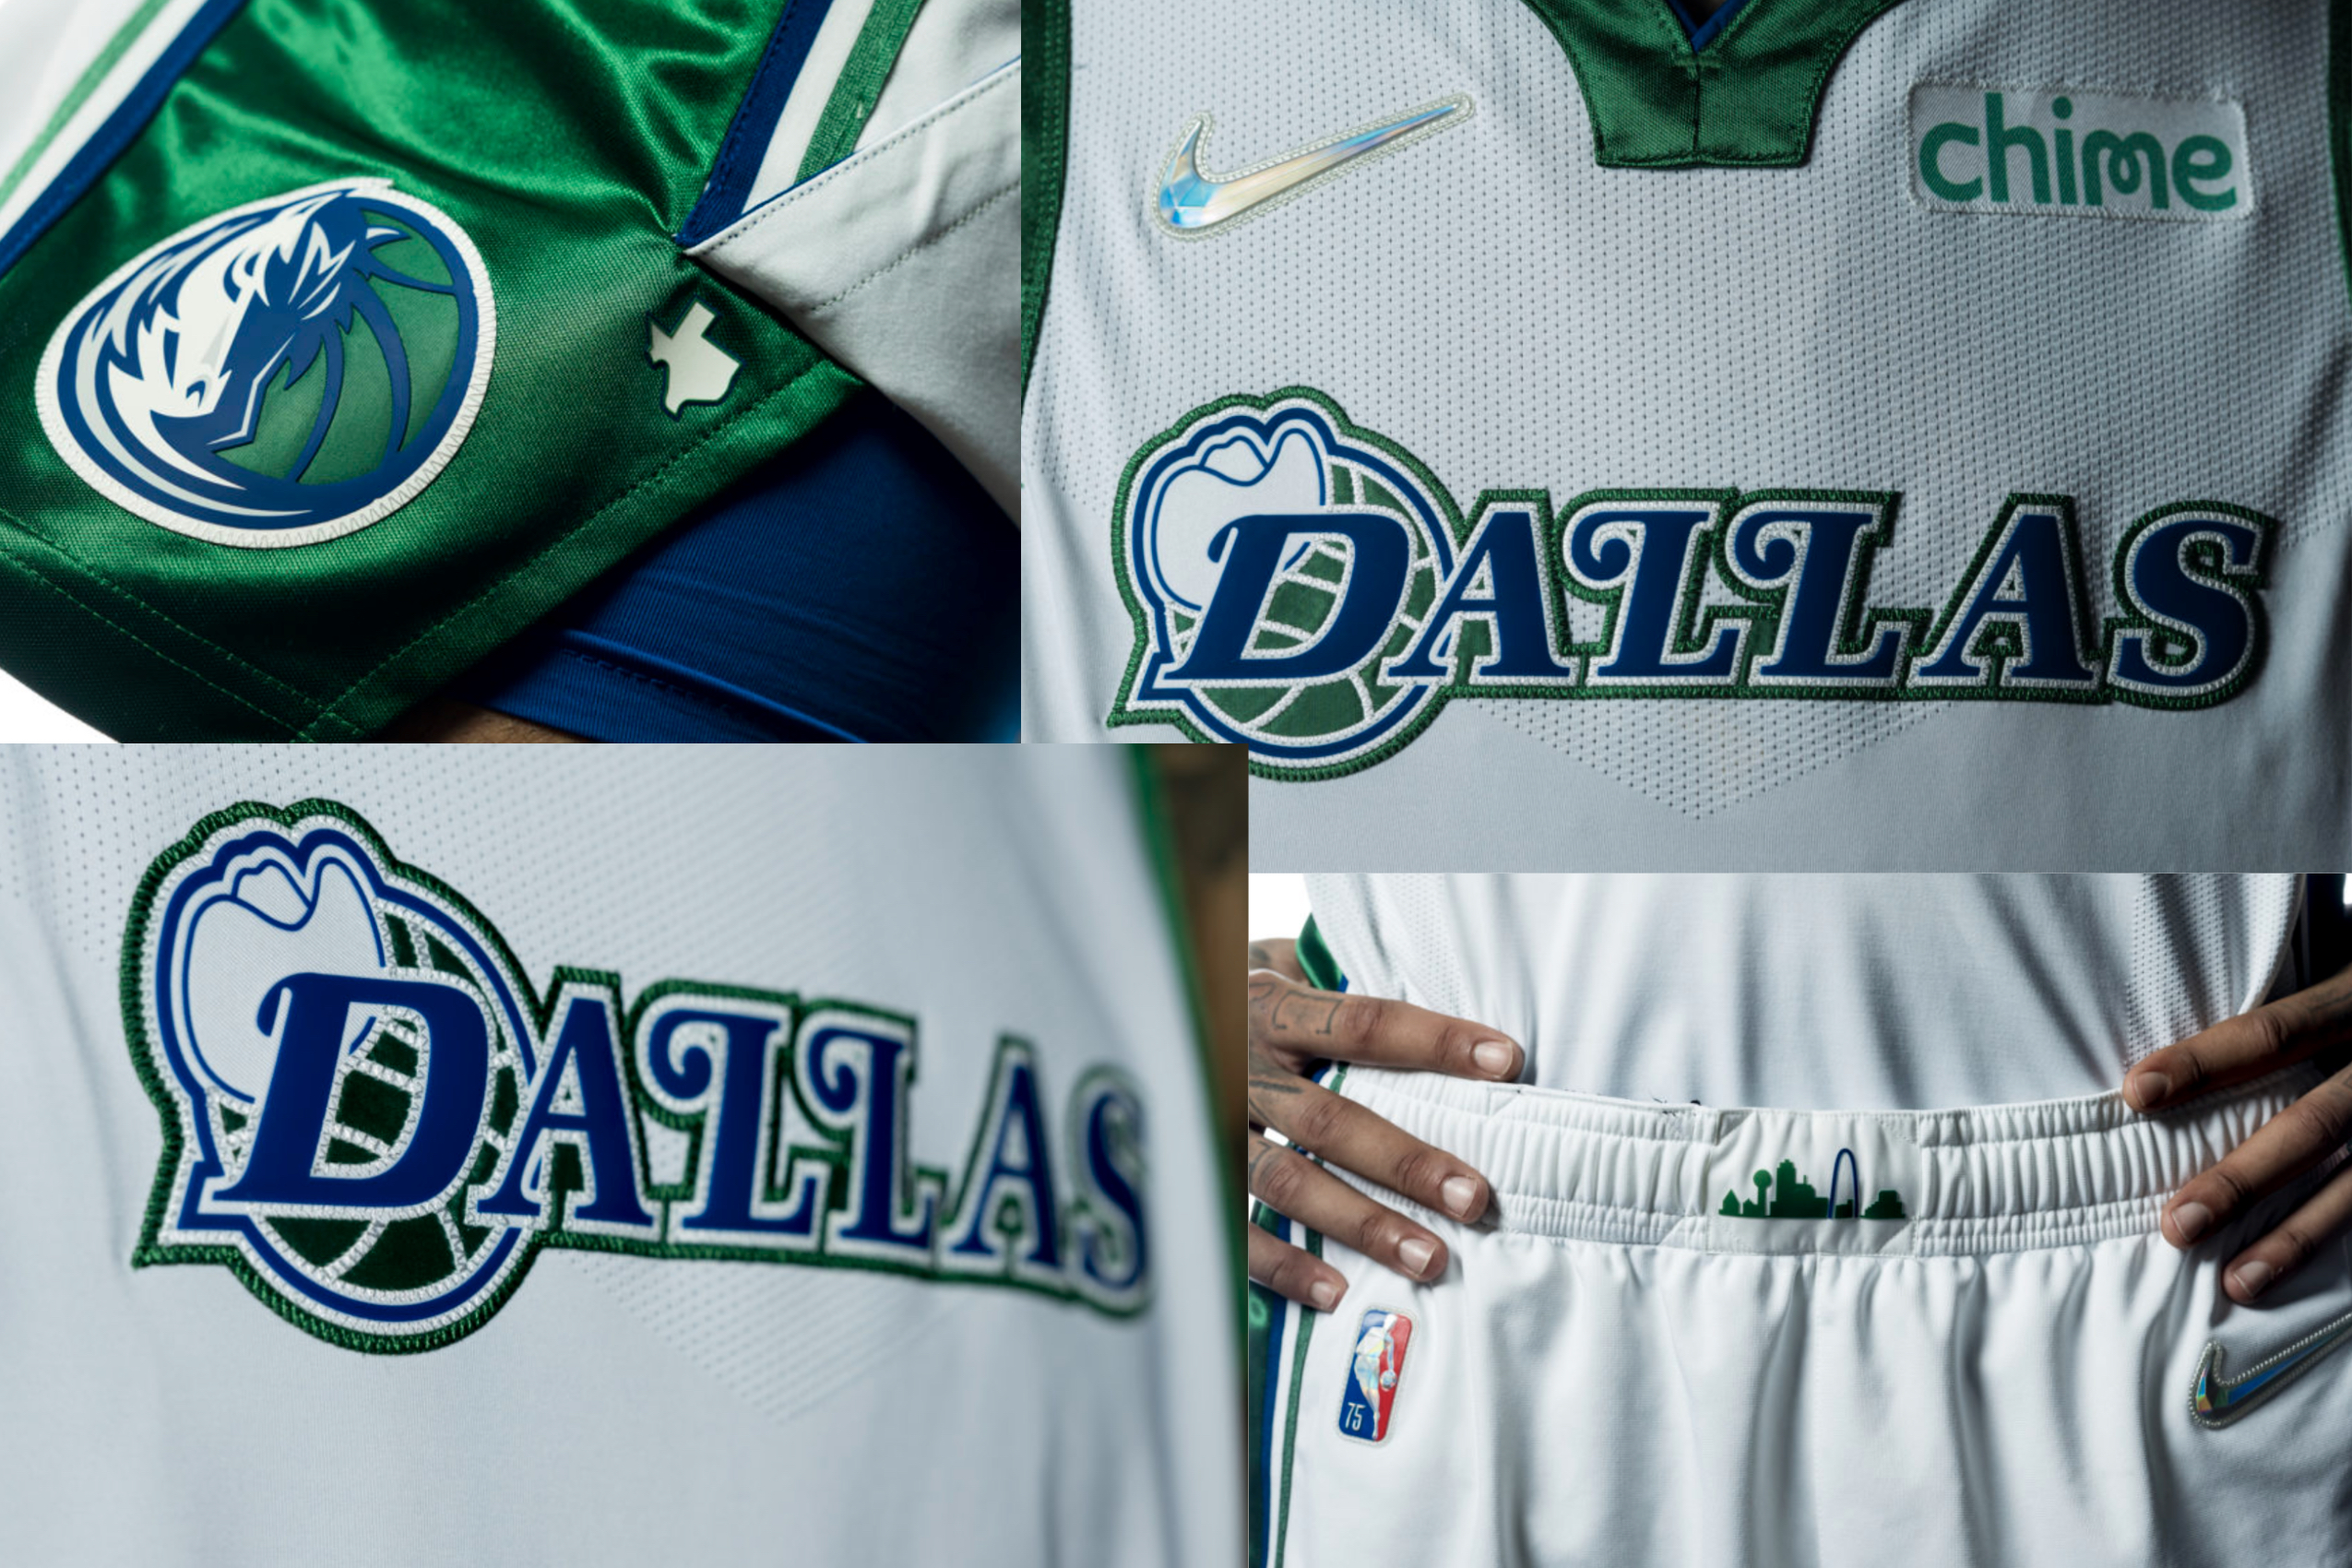 NBA's 75th anniversary City Edition jerseys celebrate each franchise's  history